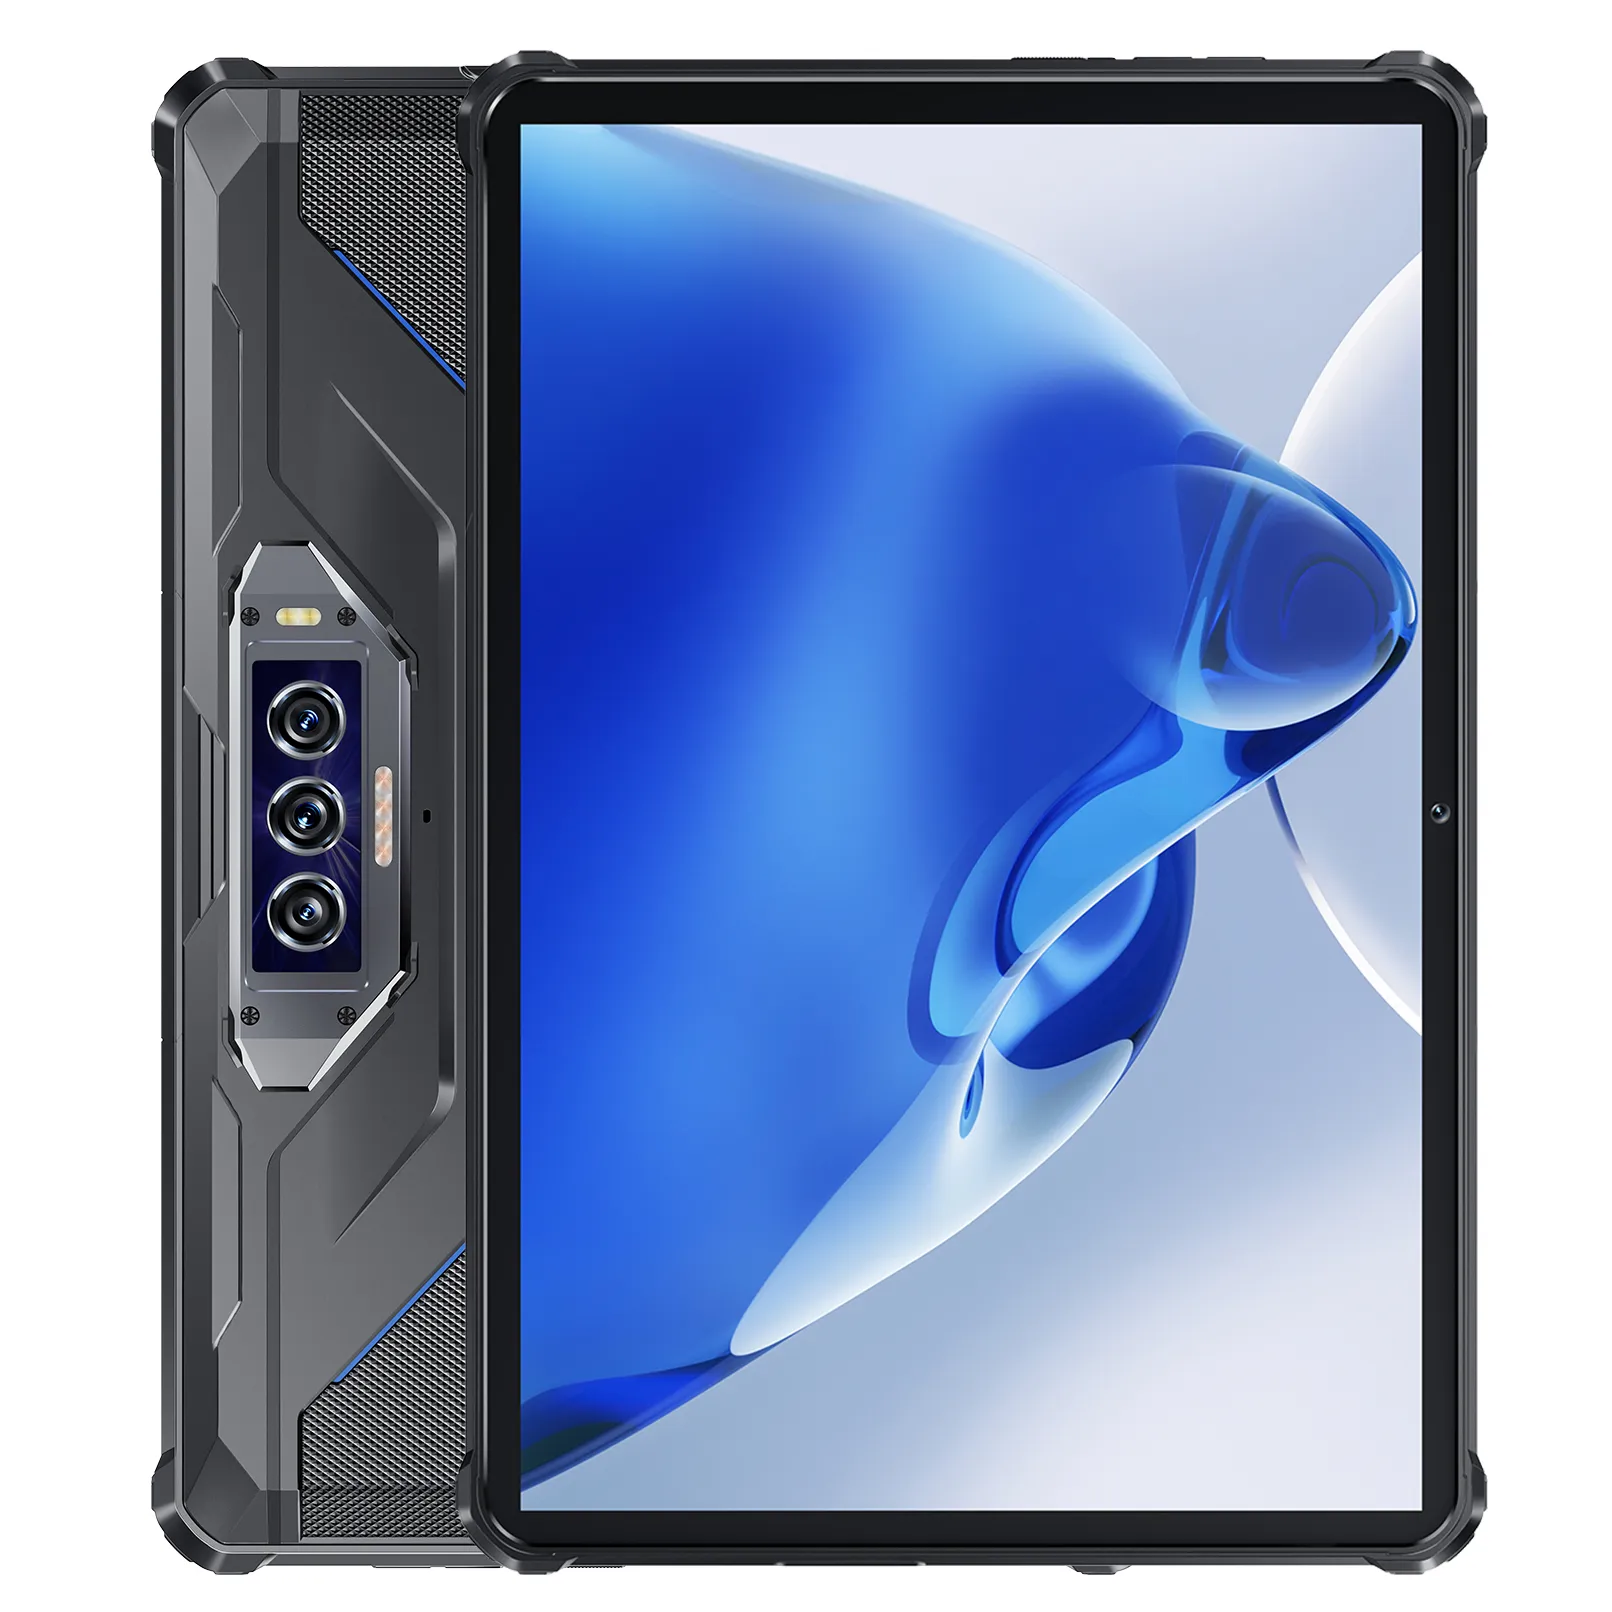 OUKITEL RT7 TITAN IP68 Tablet kasar 4G, baterai 10.1 "32000mAh 8GB + 256GB konektor HDMI SIM ganda Tablet kasar dengan NFC